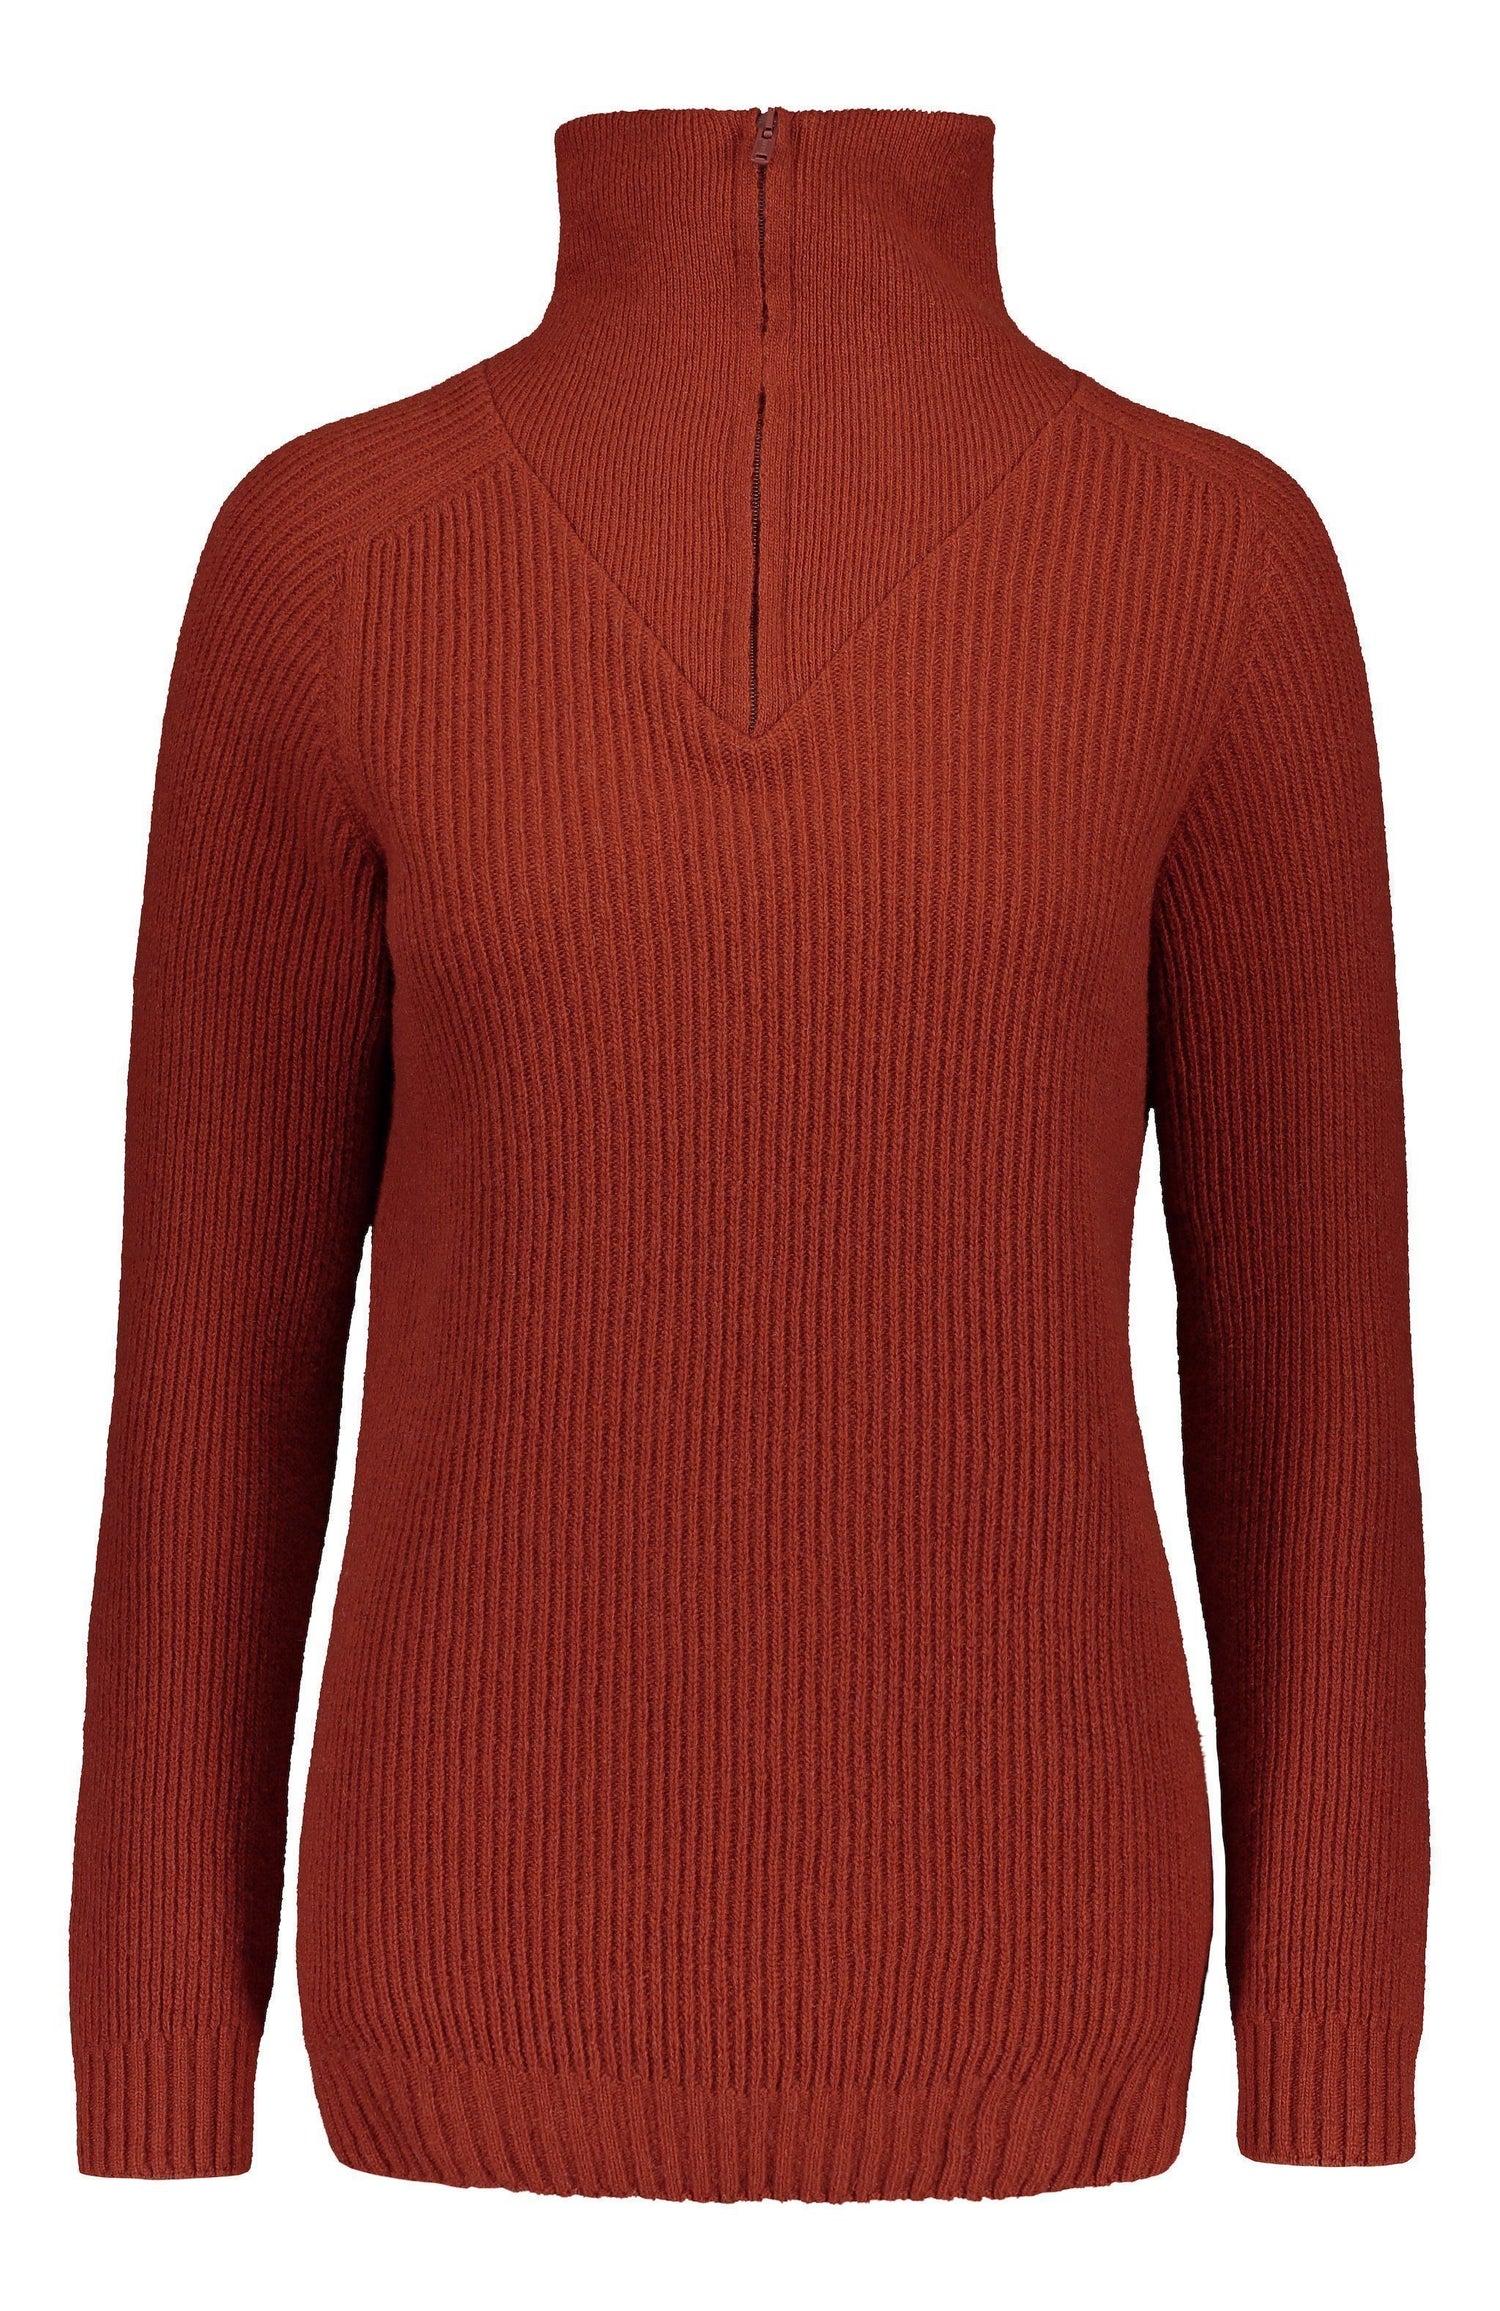 North Outdoor W's Metso Sweater - 100 % Merino Wool - Made in Finland Rust Shirt